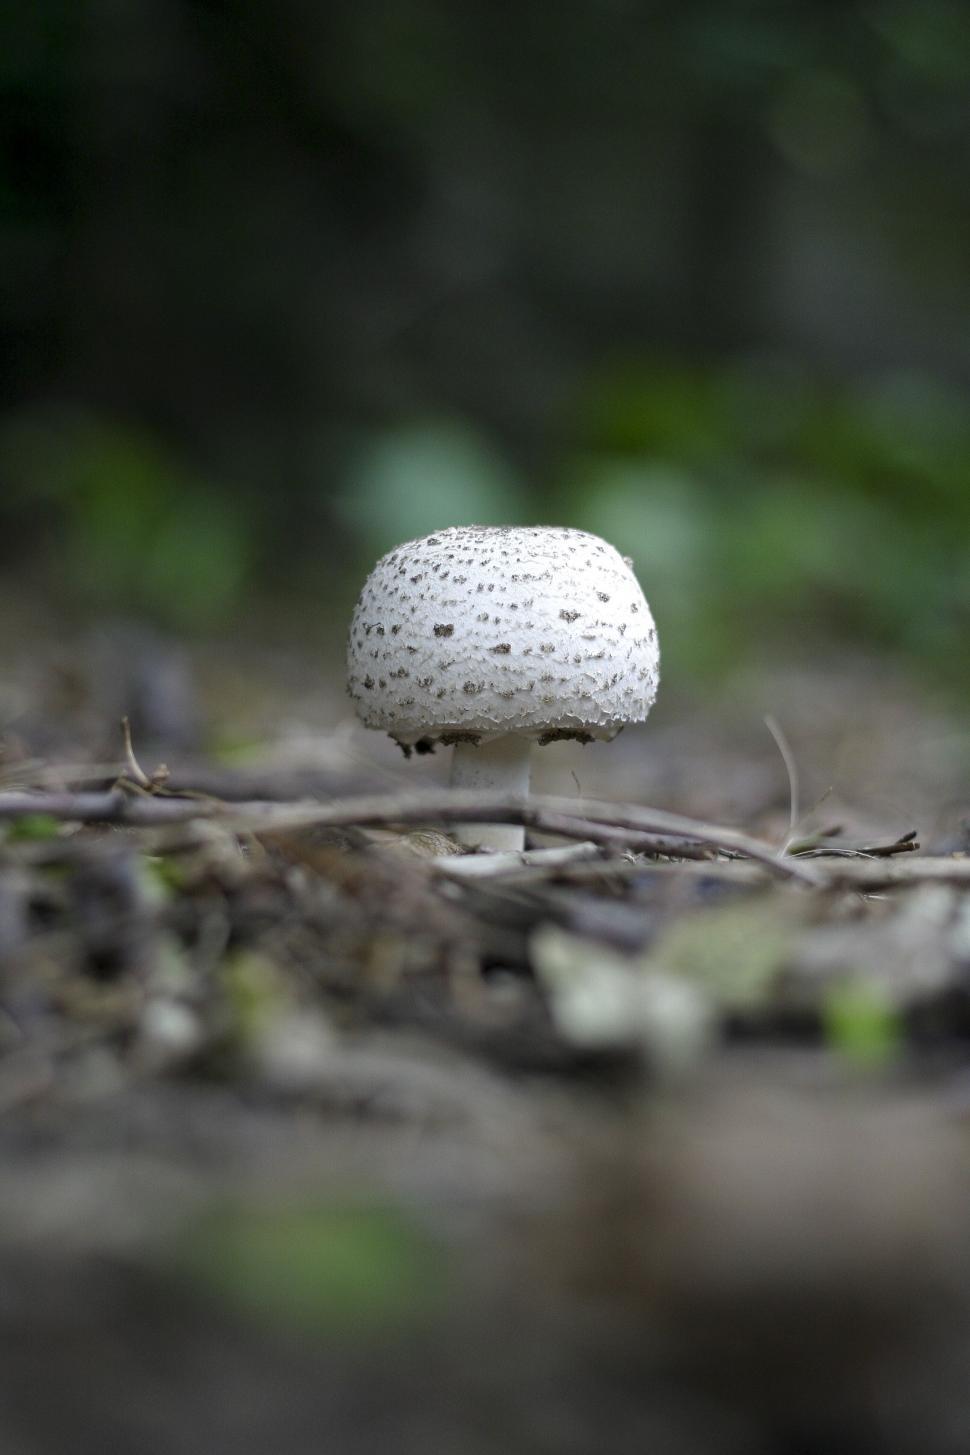 Free Image of White Mushroom 